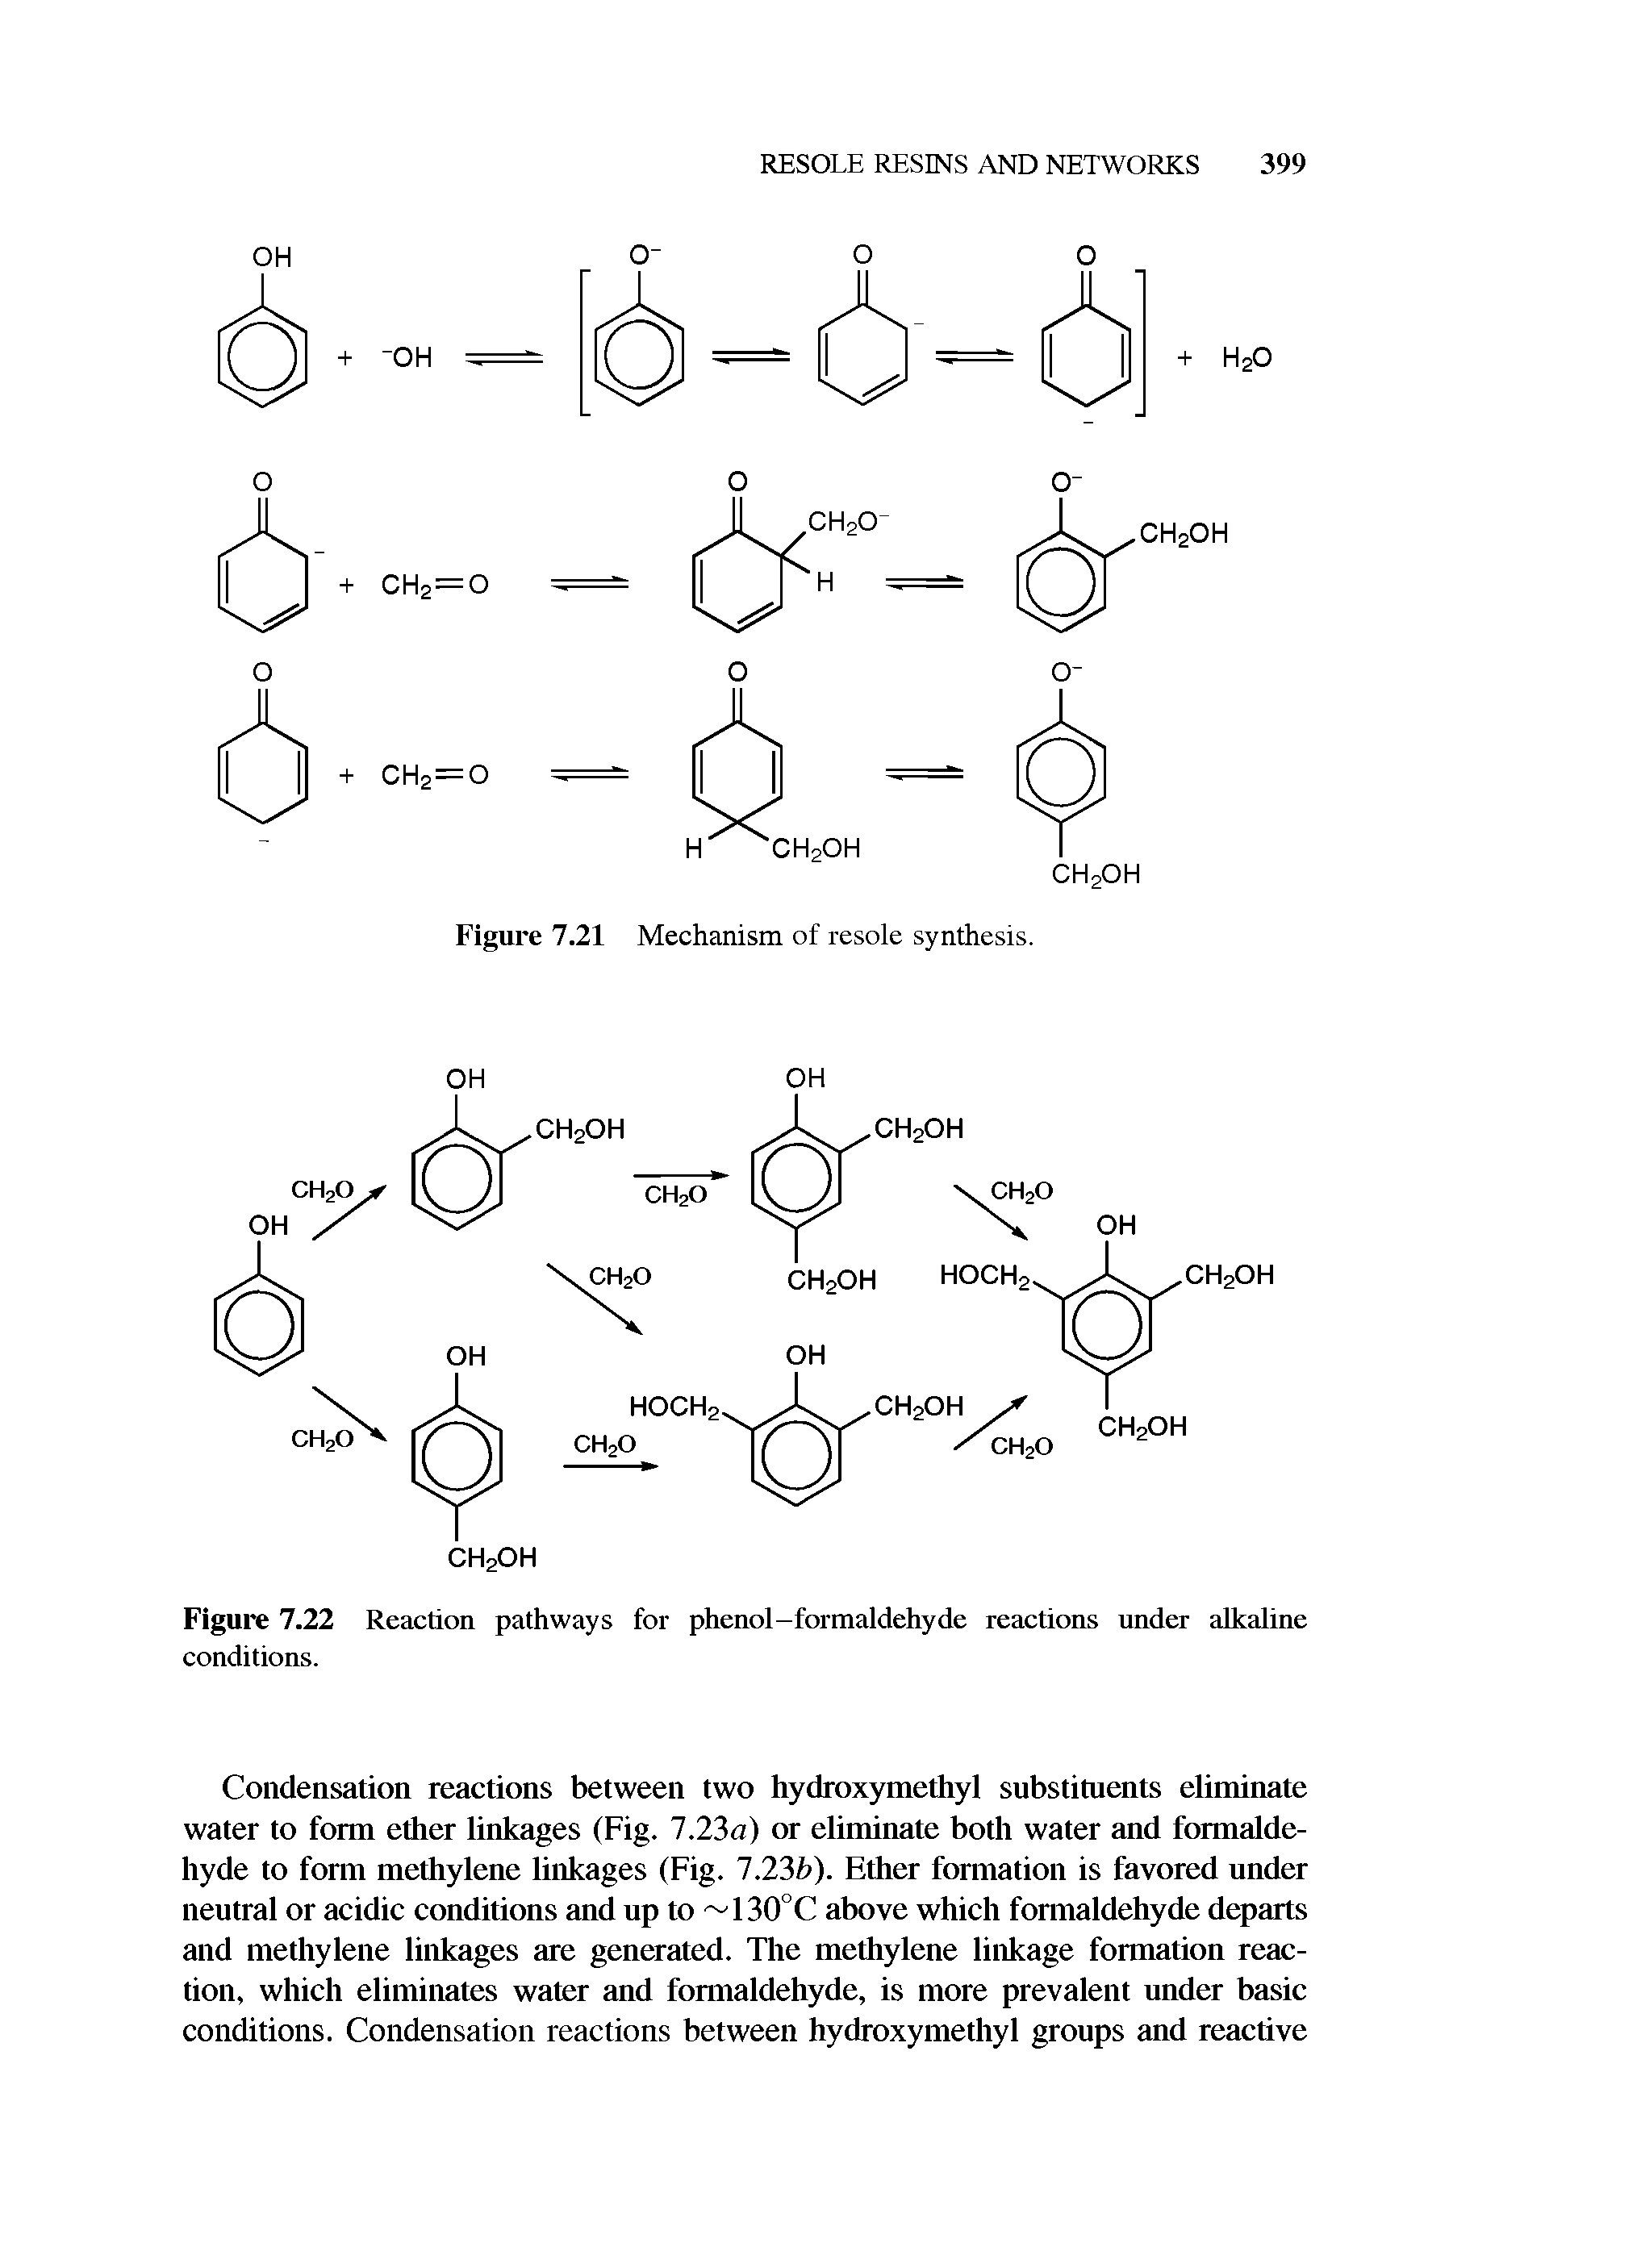 Figure 7.22 Reaction pathways for phenol-formaldehyde reactions under alkaline conditions.